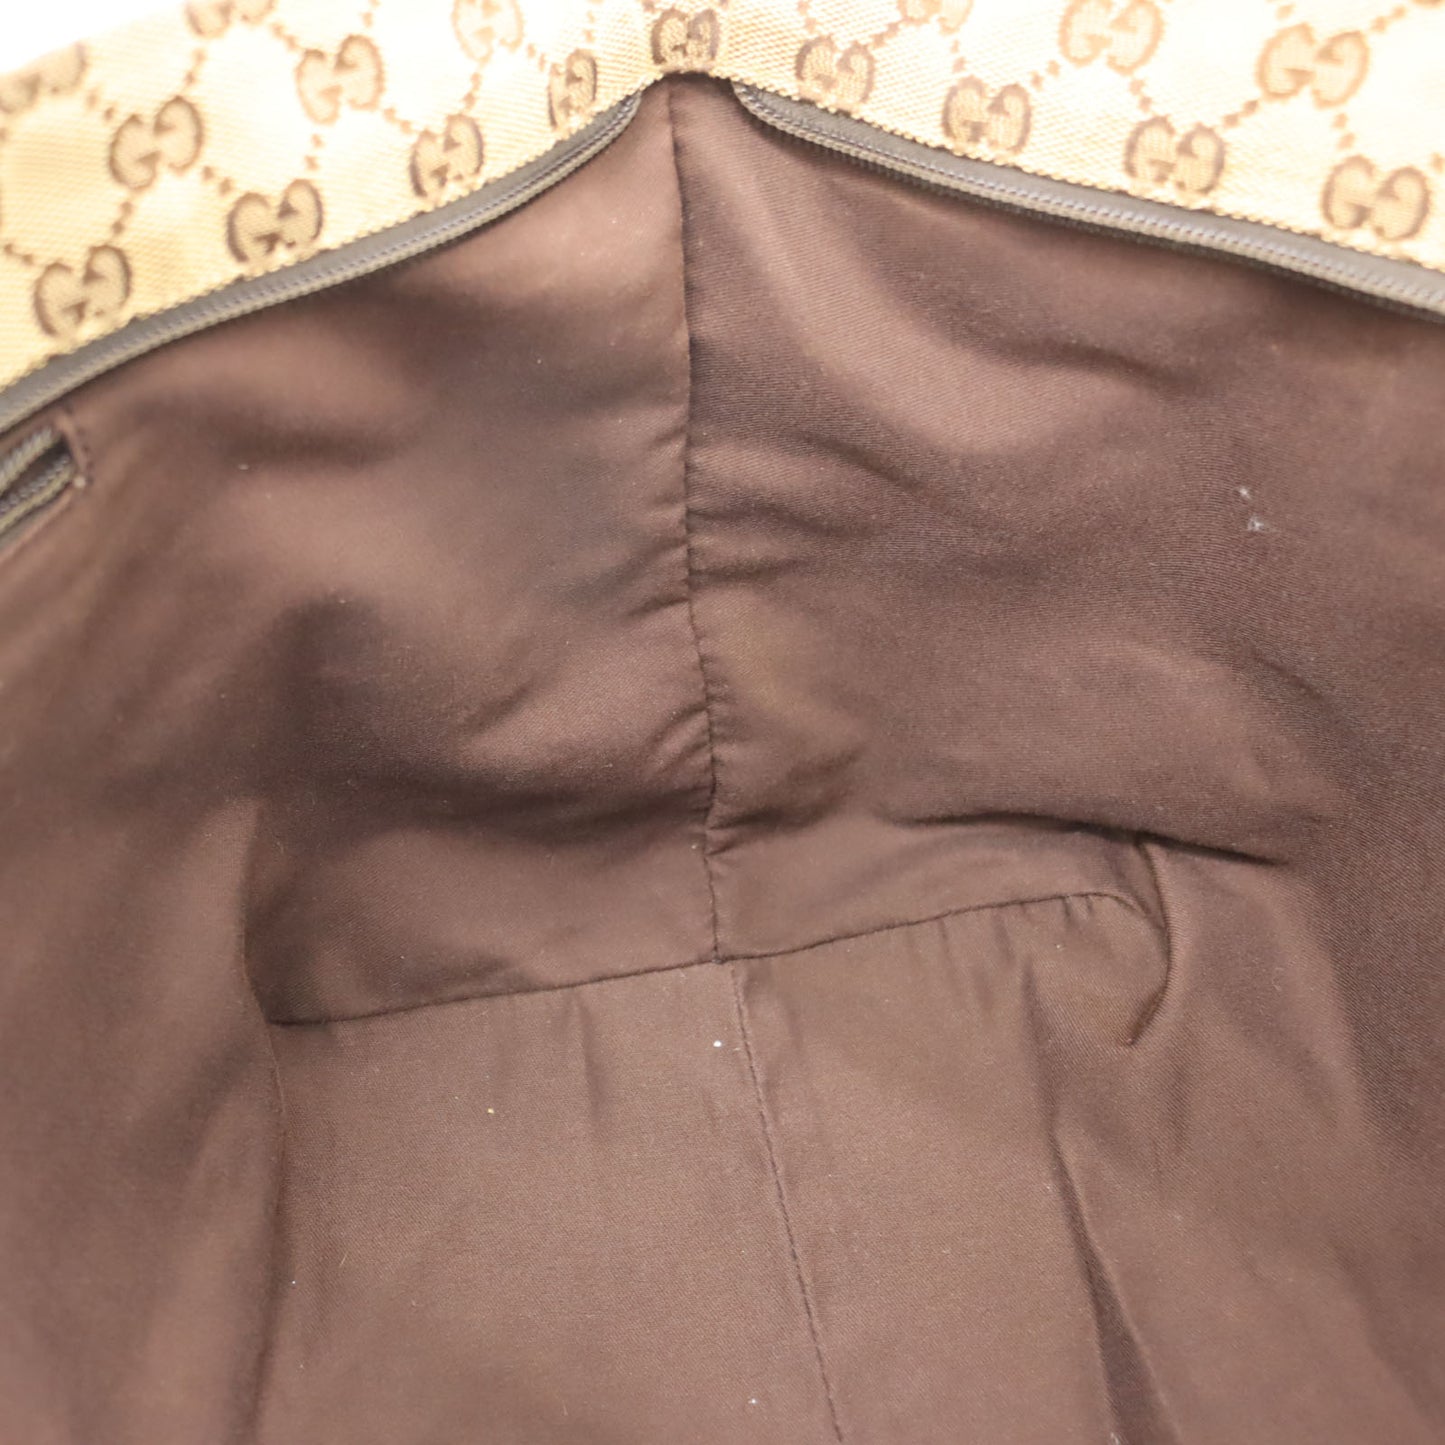 GUCCI Original GG Web Stripe Tote Handbag Brown Canvas #BT459